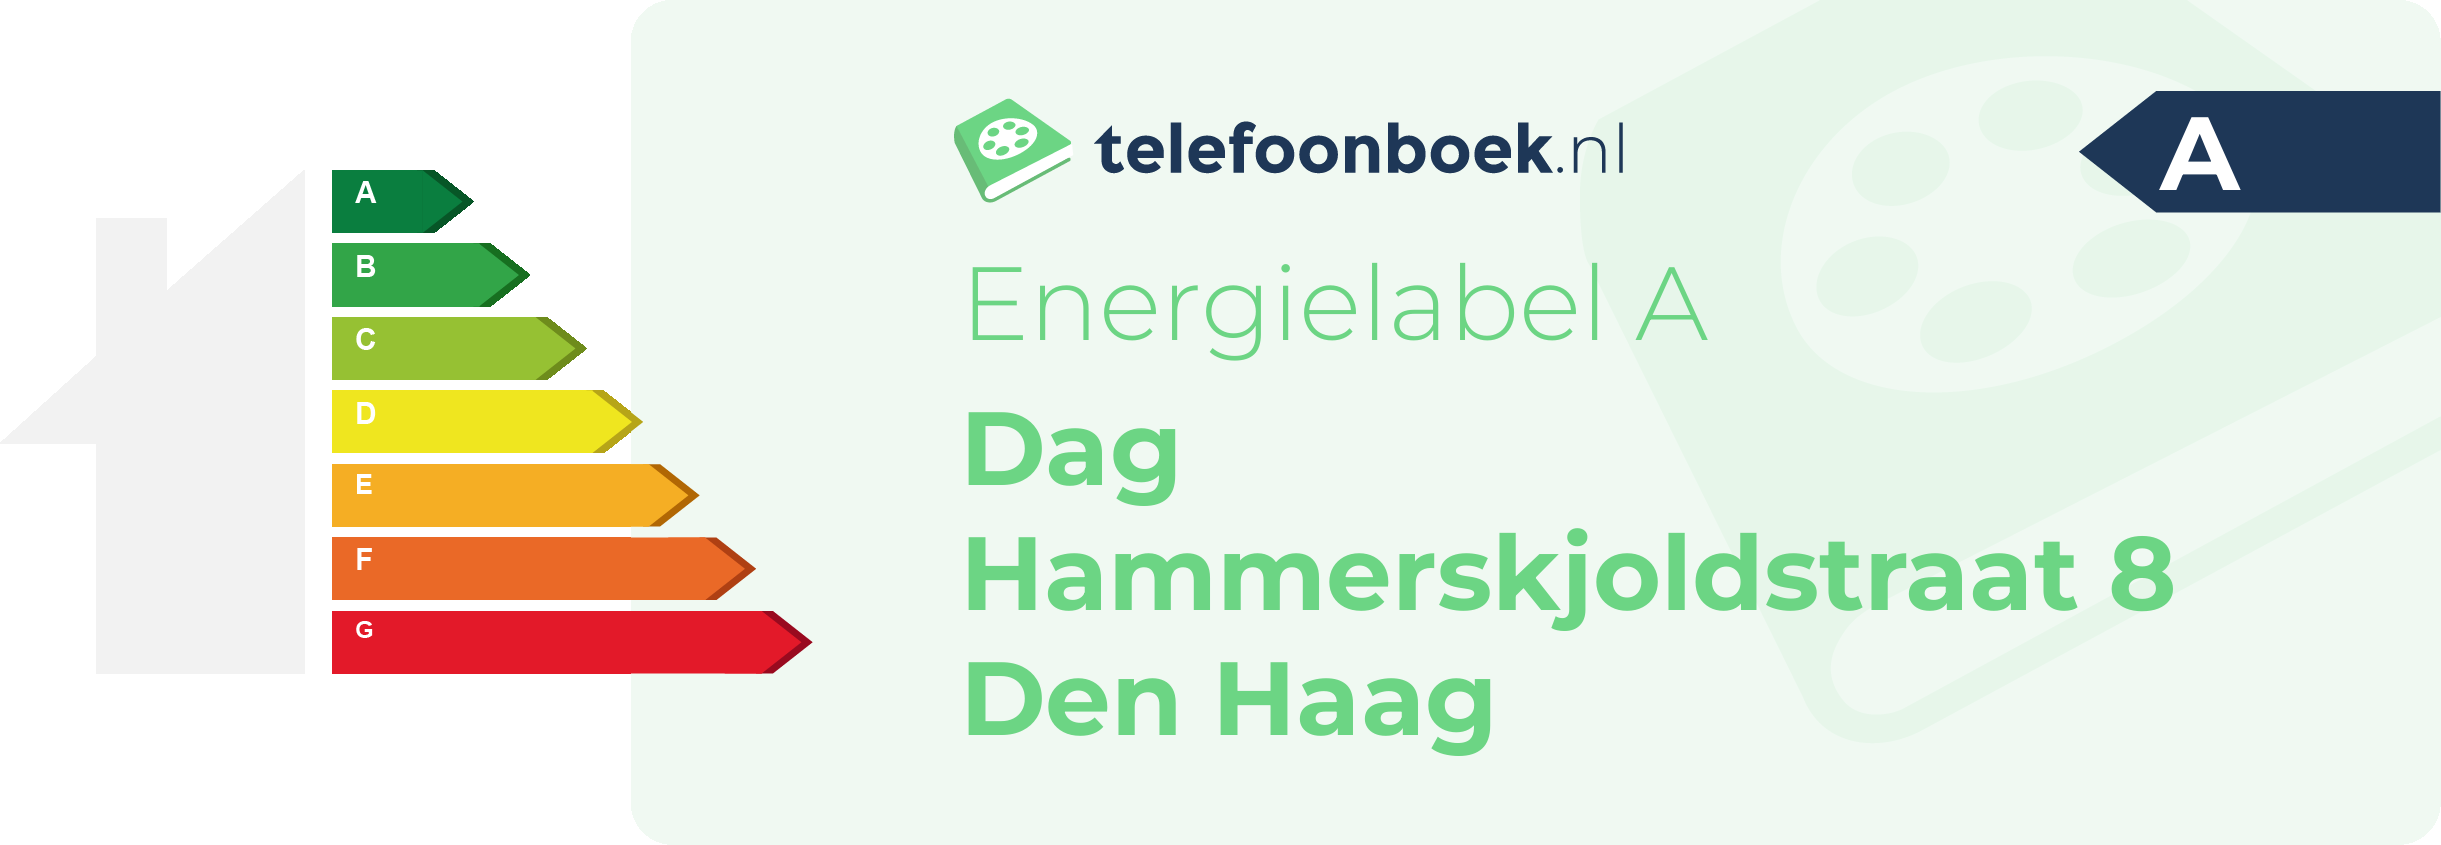 Energielabel Dag Hammerskjoldstraat 8 Den Haag